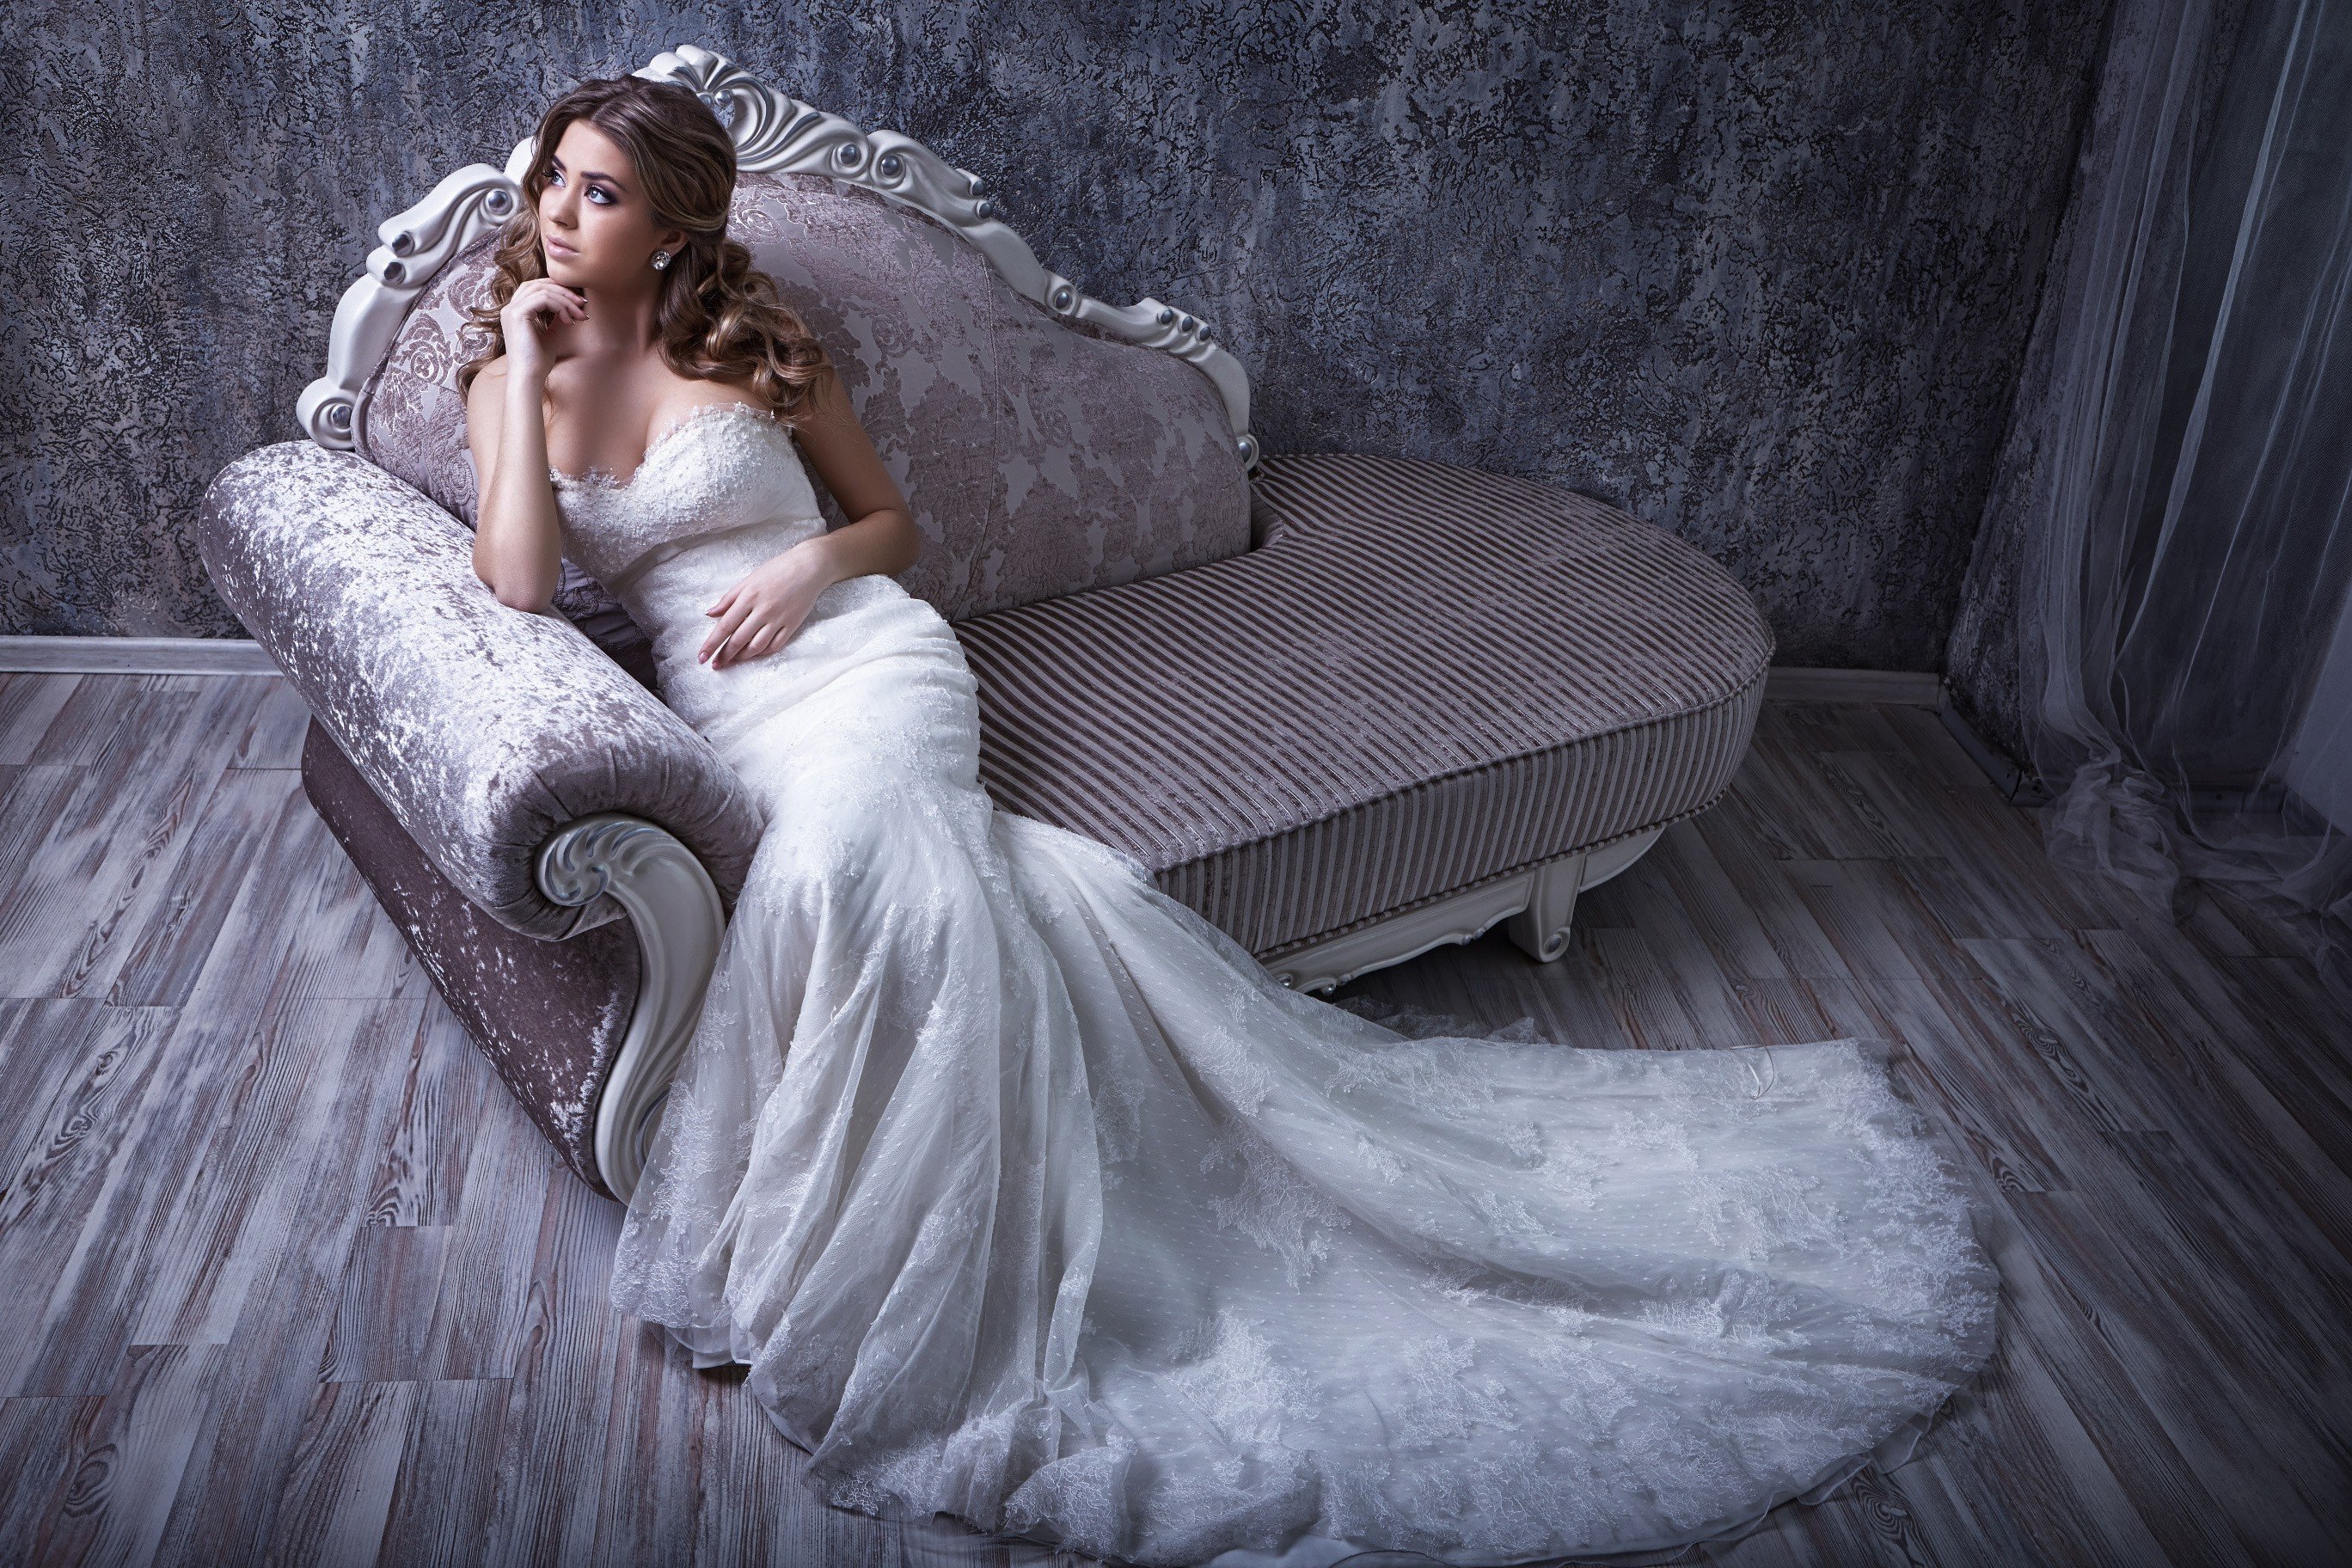 Wallpaper, 2736x1824 px, Bride Dress, couch, dress, model, women